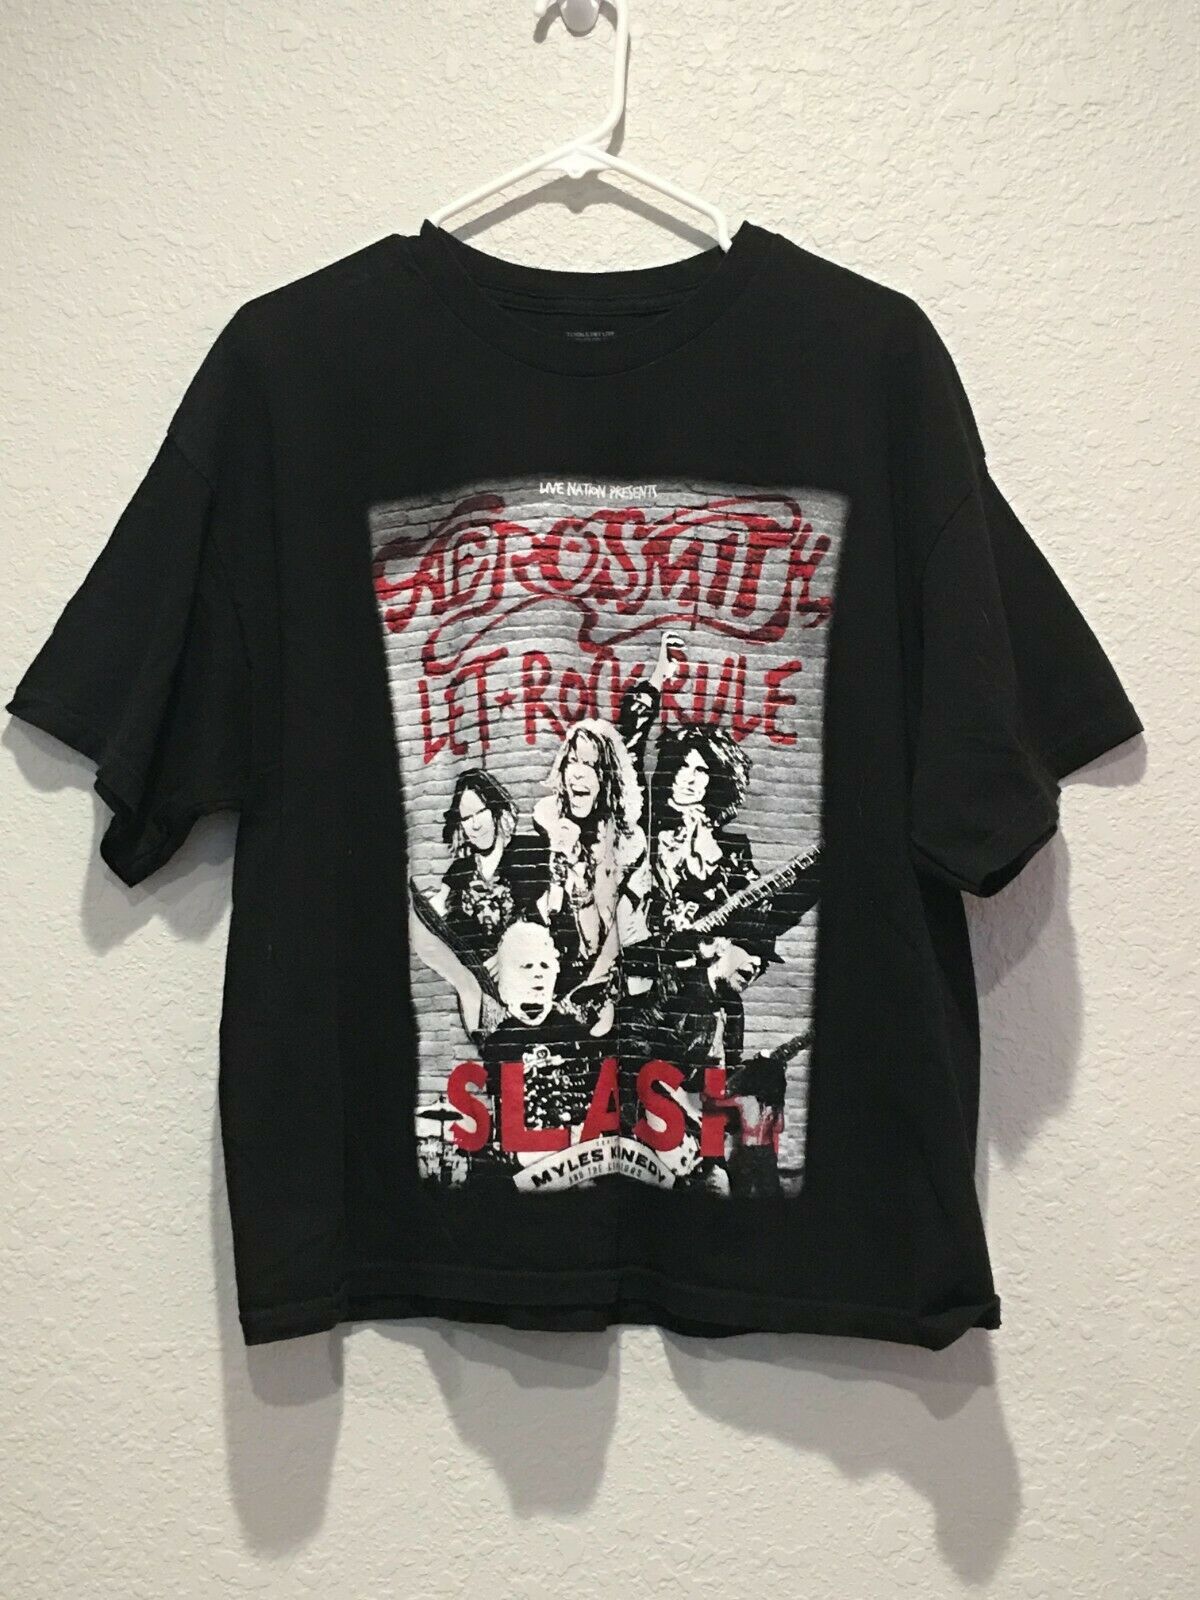 Aerosmith Let Rock Rule 2014 World Tour T-shirt Size Small Band Tee Slash